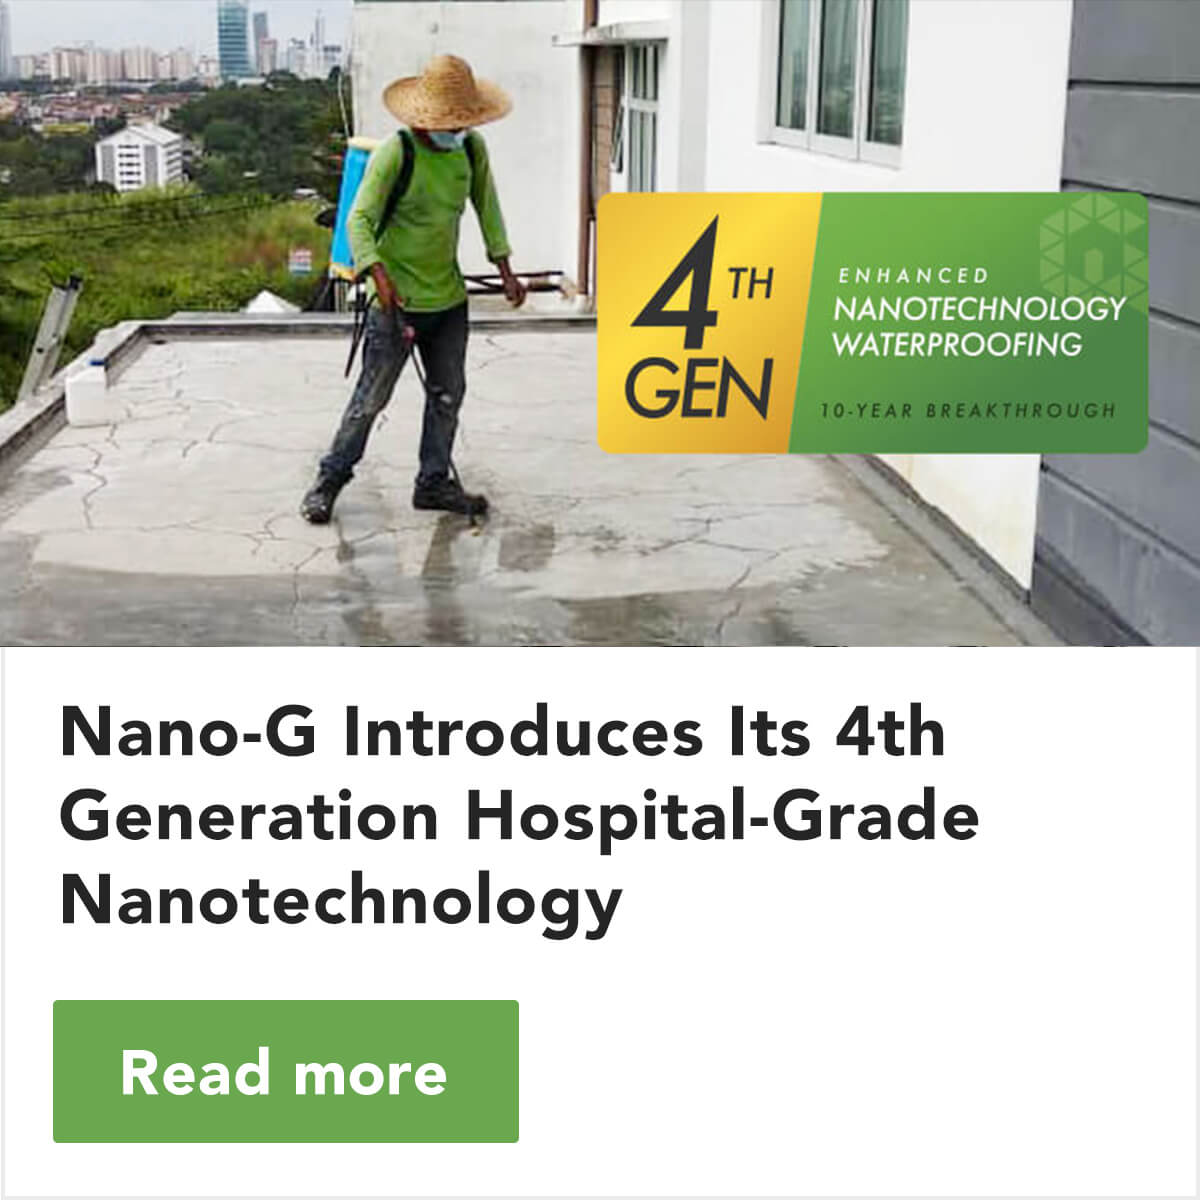 Nano-G 4th Gen Hospital-Grade Nanotechnology Waterproofing Solution